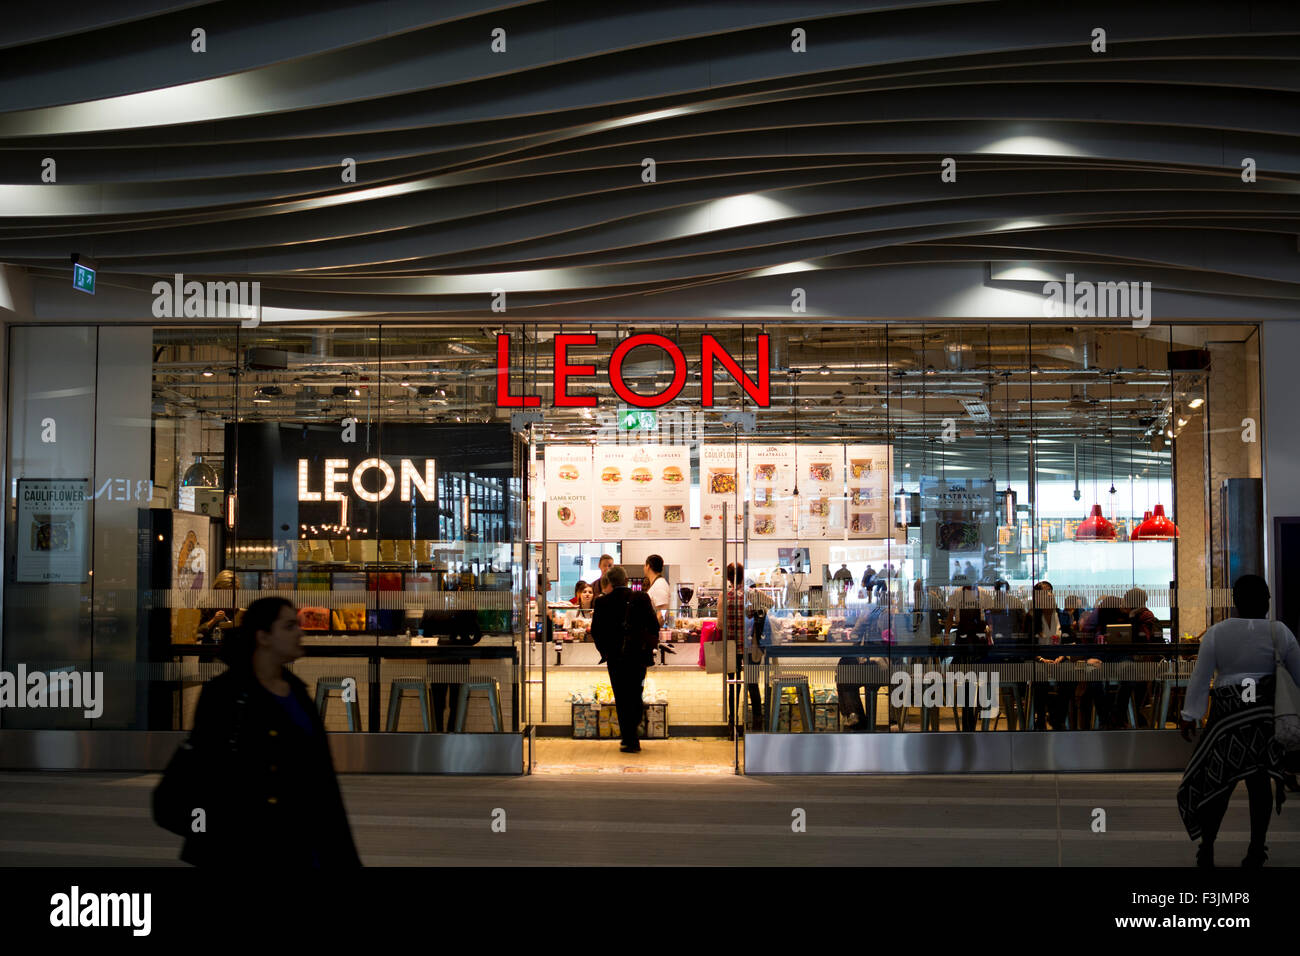 Leon restaurant, Grand central, Birmingham, UK Stock Photo